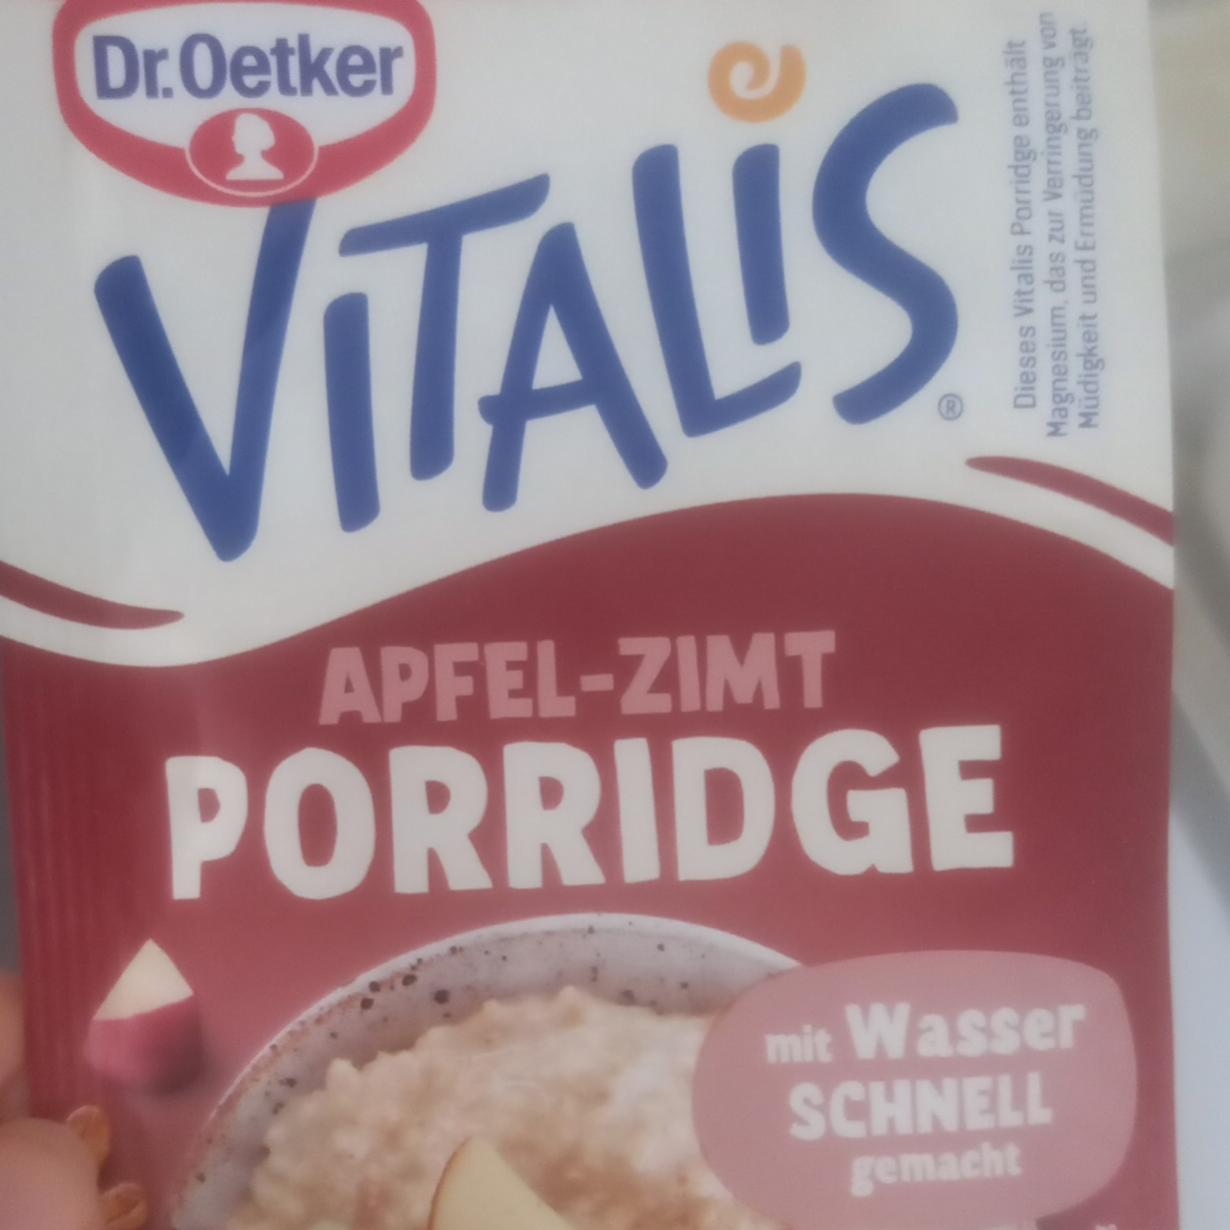 Fotografie - Vitalis Apfel-Zimt Porridge Dr.Oetker